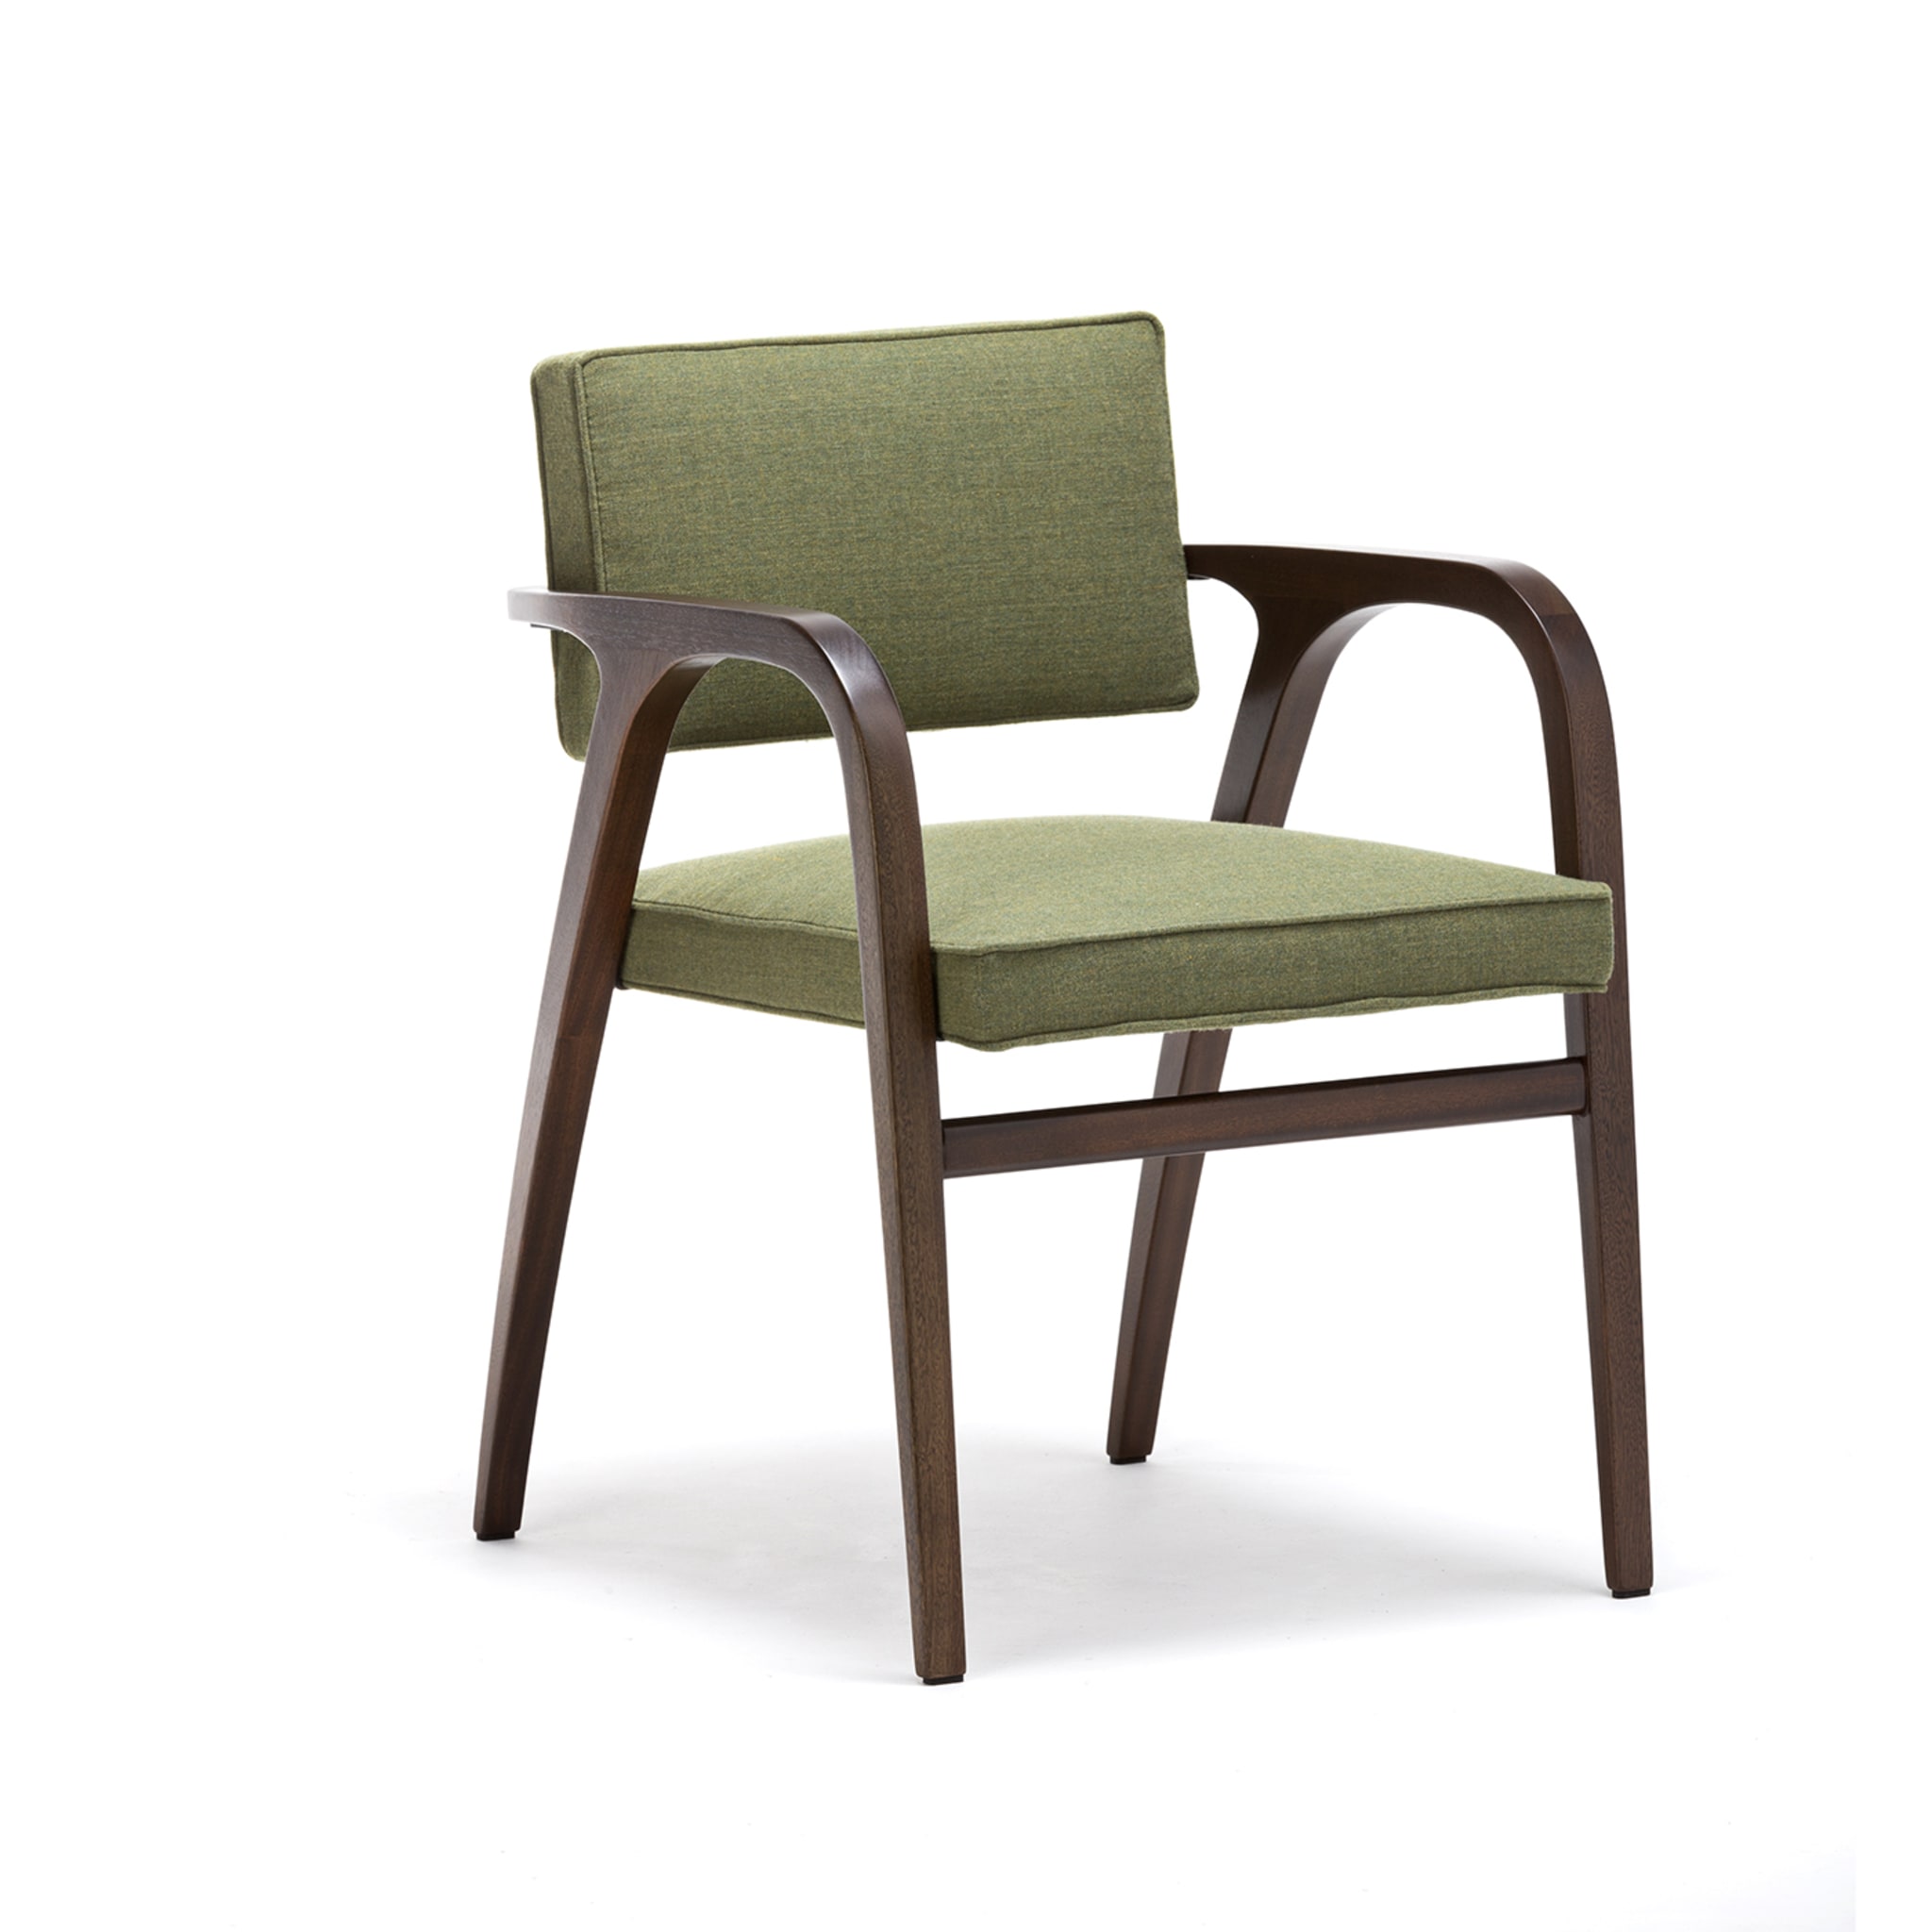 1938 Chair by Franco Albini - Alternative view 4